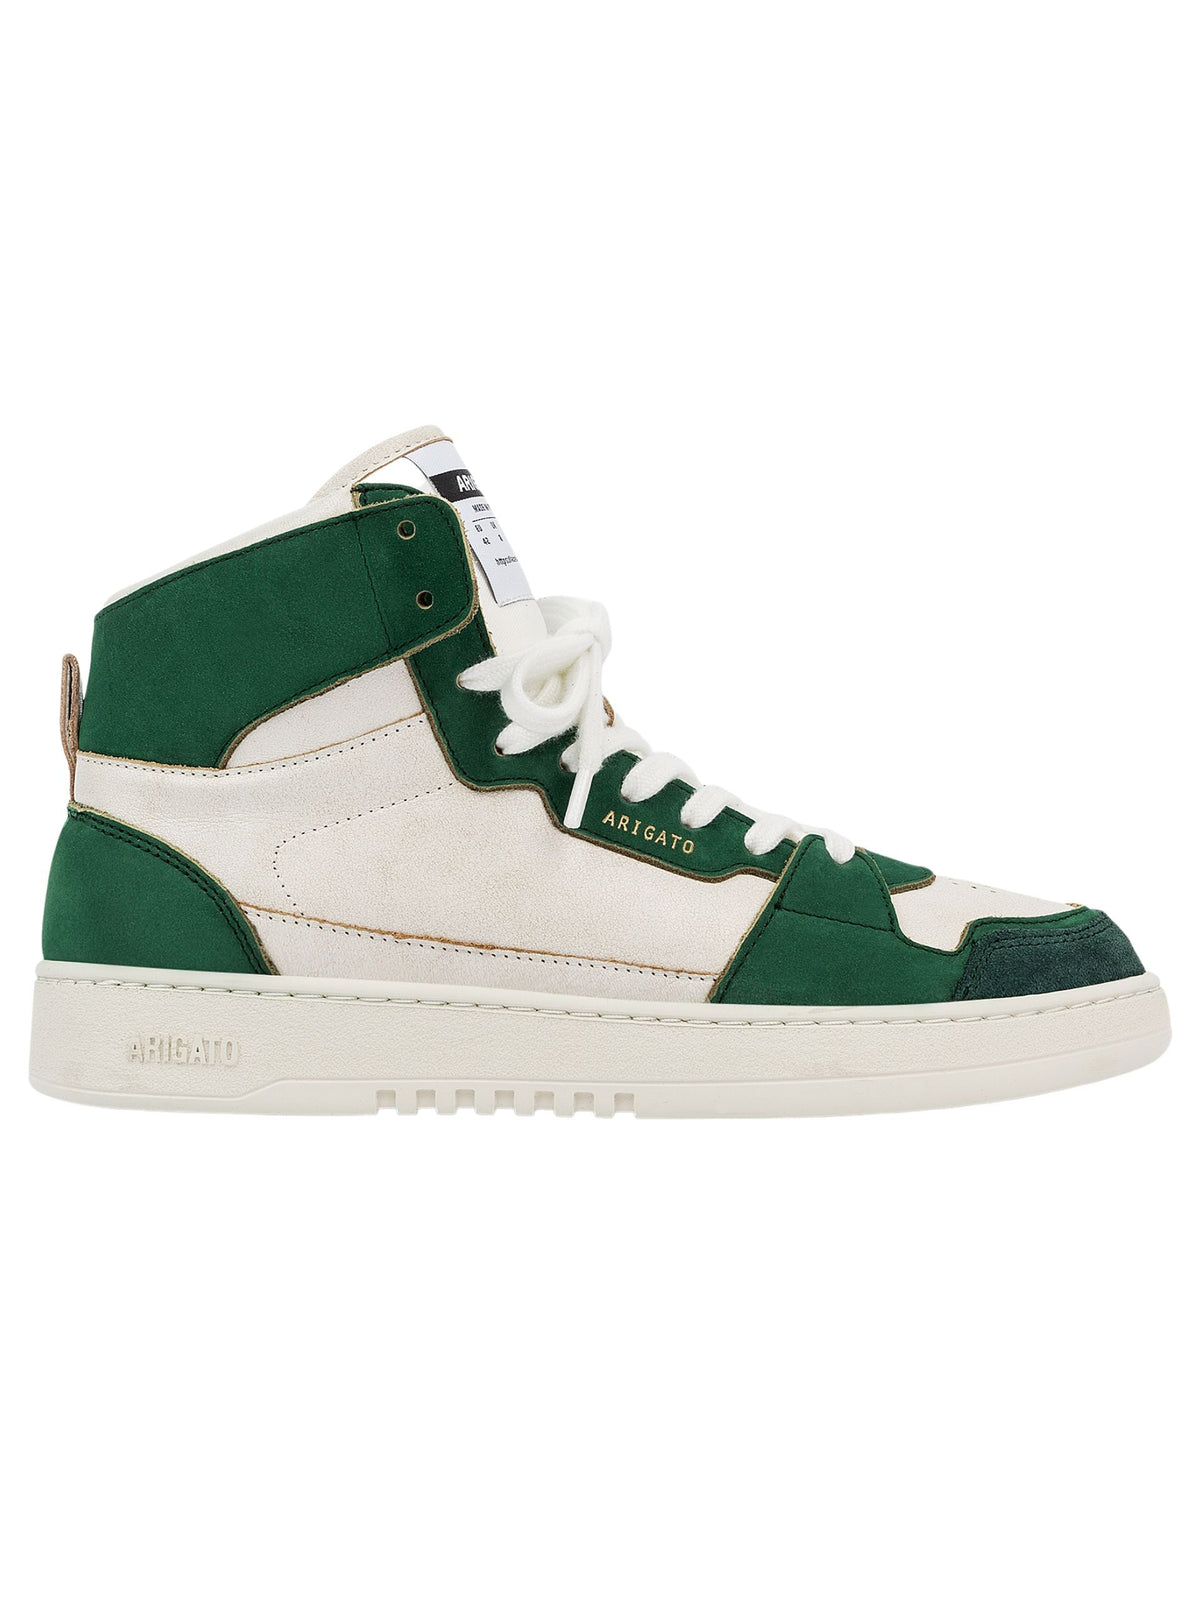 Dice Hi Sneaker / White &amp; Kale Green Womens Axel Arigato 